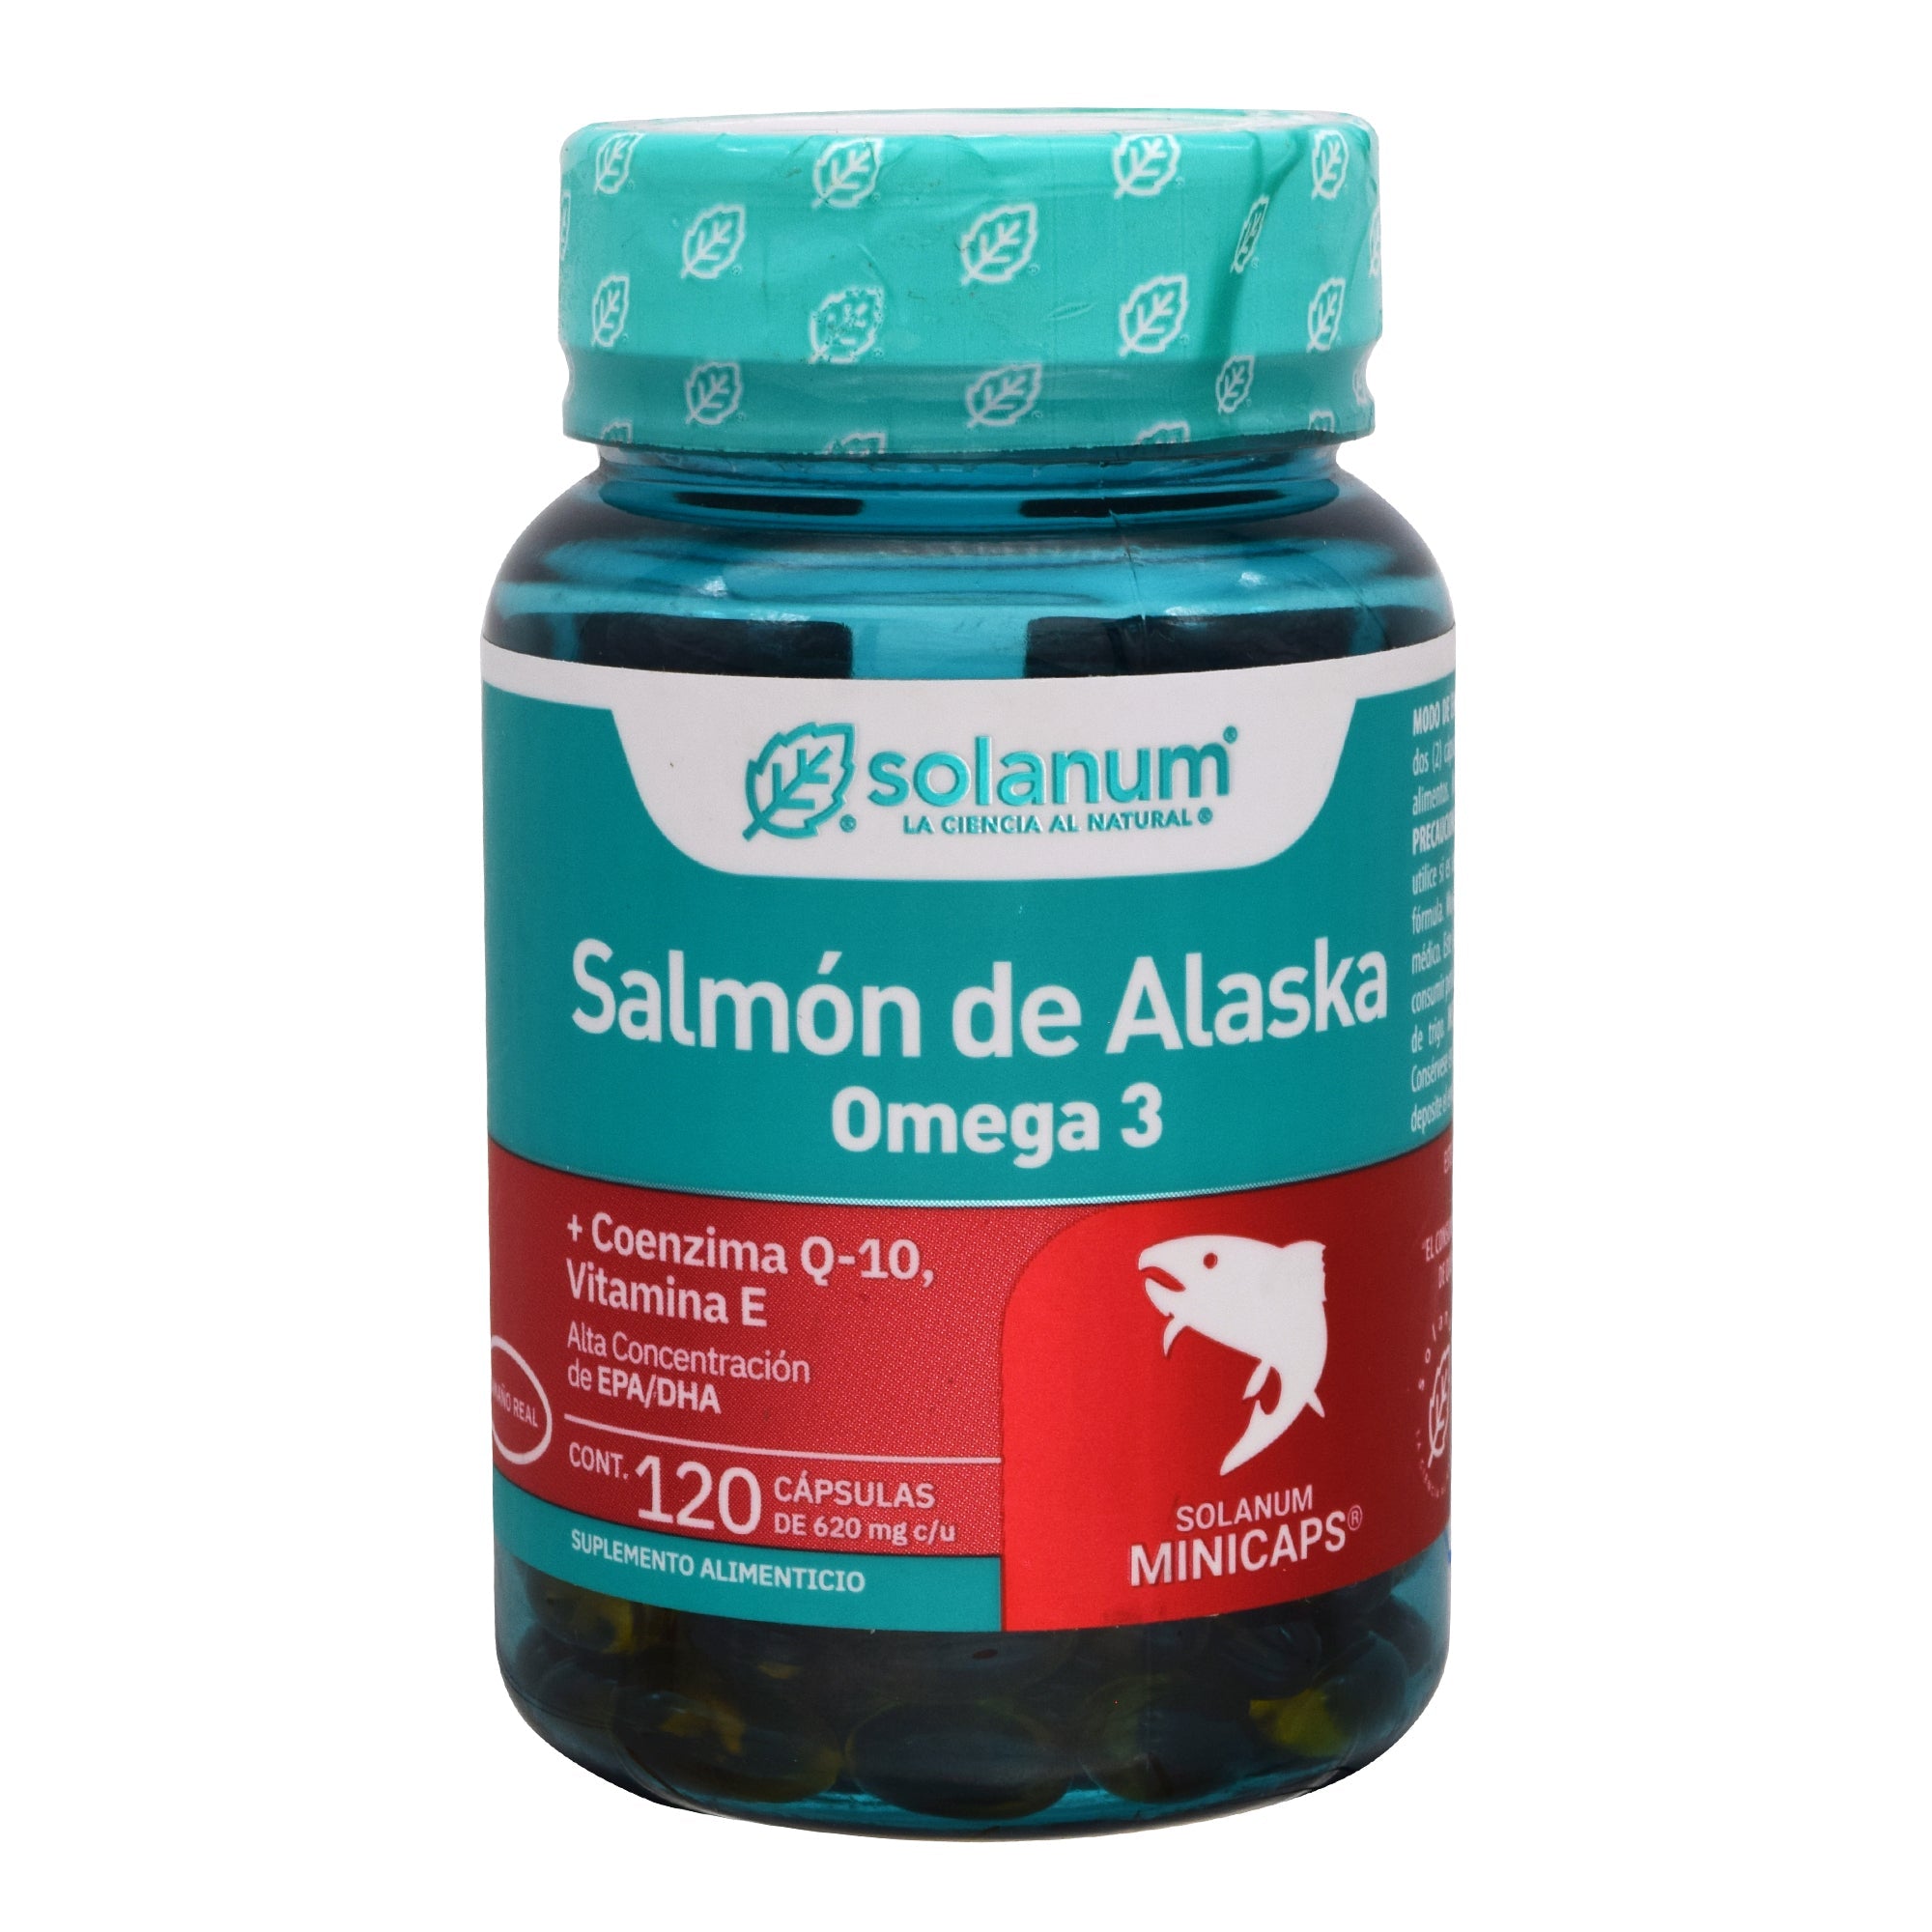 Salmon de alaska omega 3 coenzima q10 vit e 120 cap